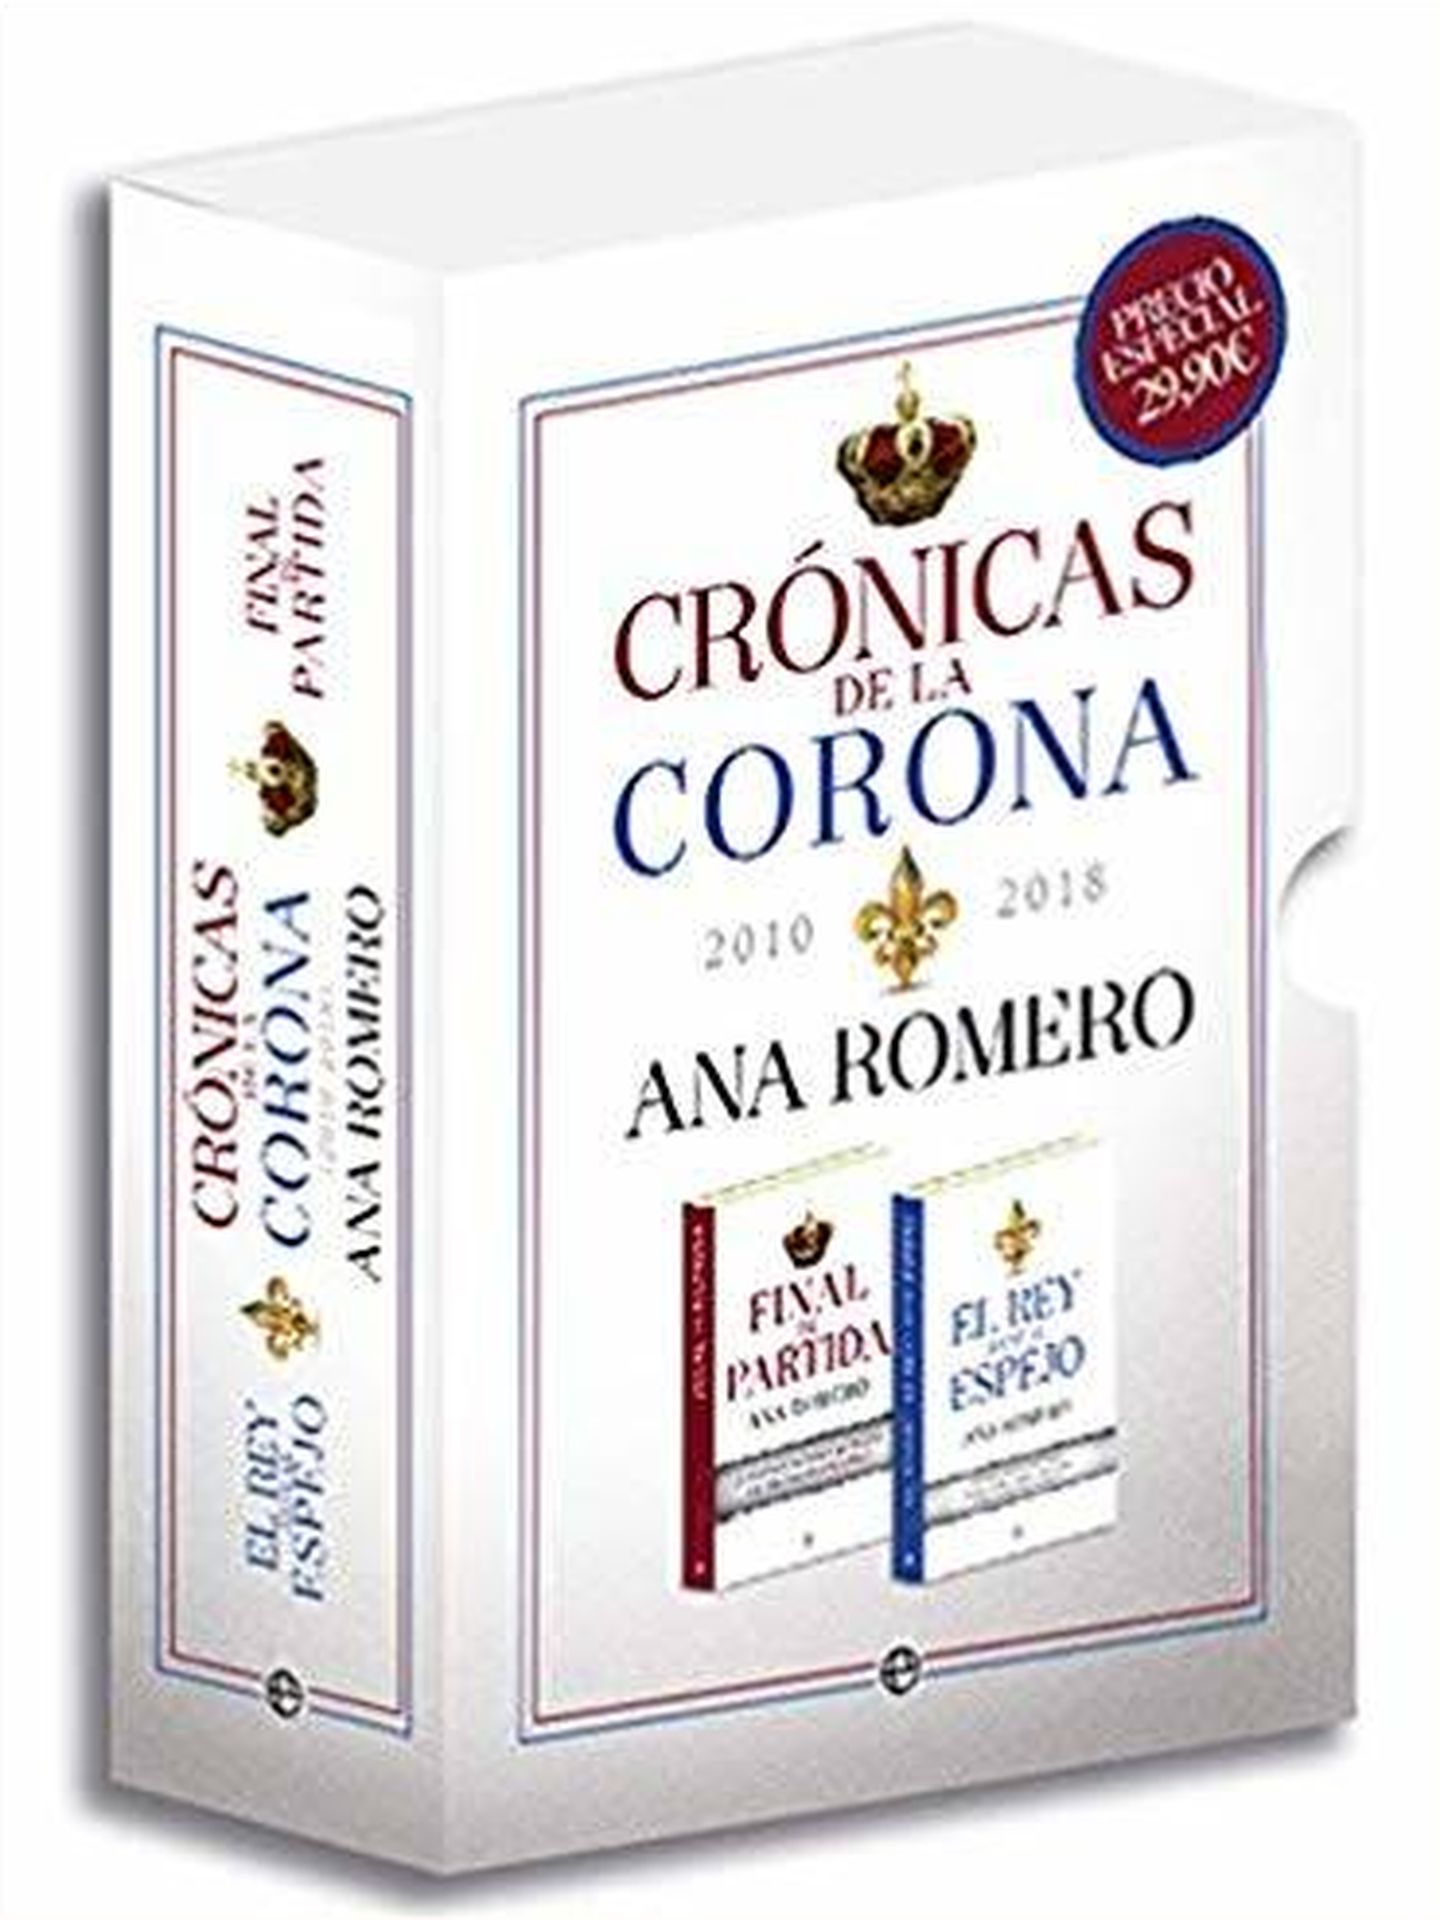 Nuevo libro de Ana Romero